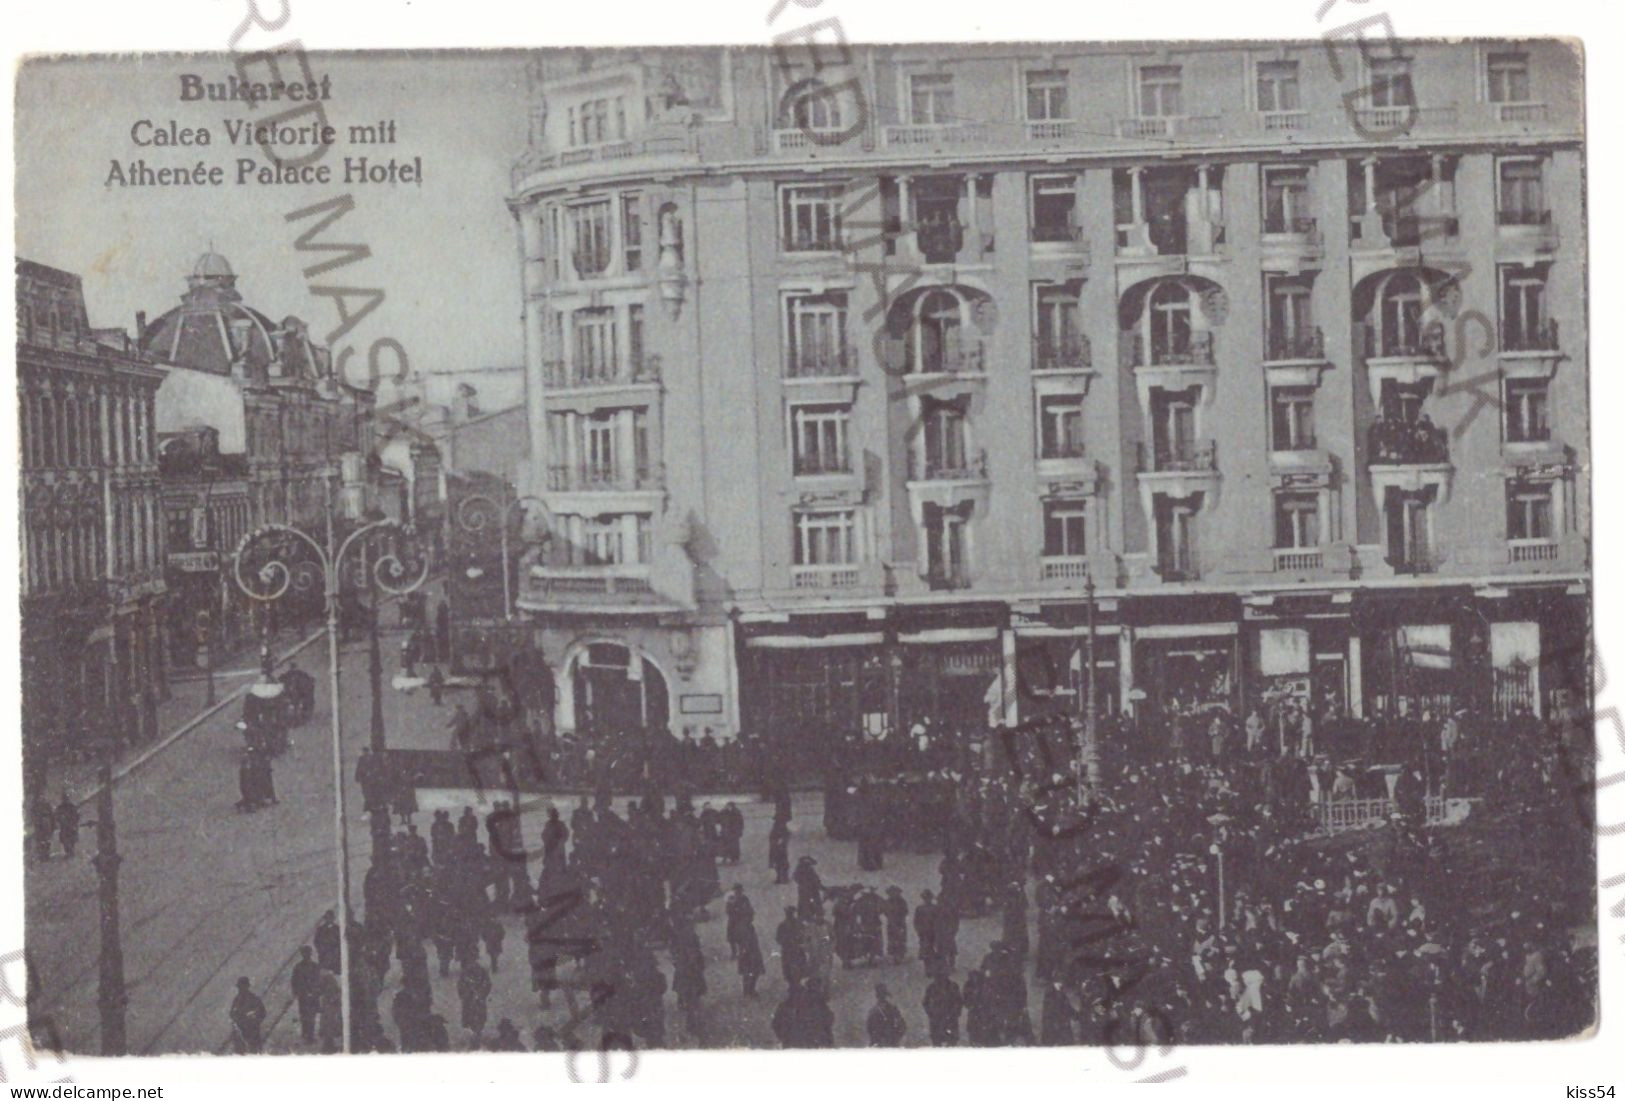 RO 47 - 20741 BUCURESTI, Victoriei Ave, Romania - Old Postcard - Used - 1927 - Romania